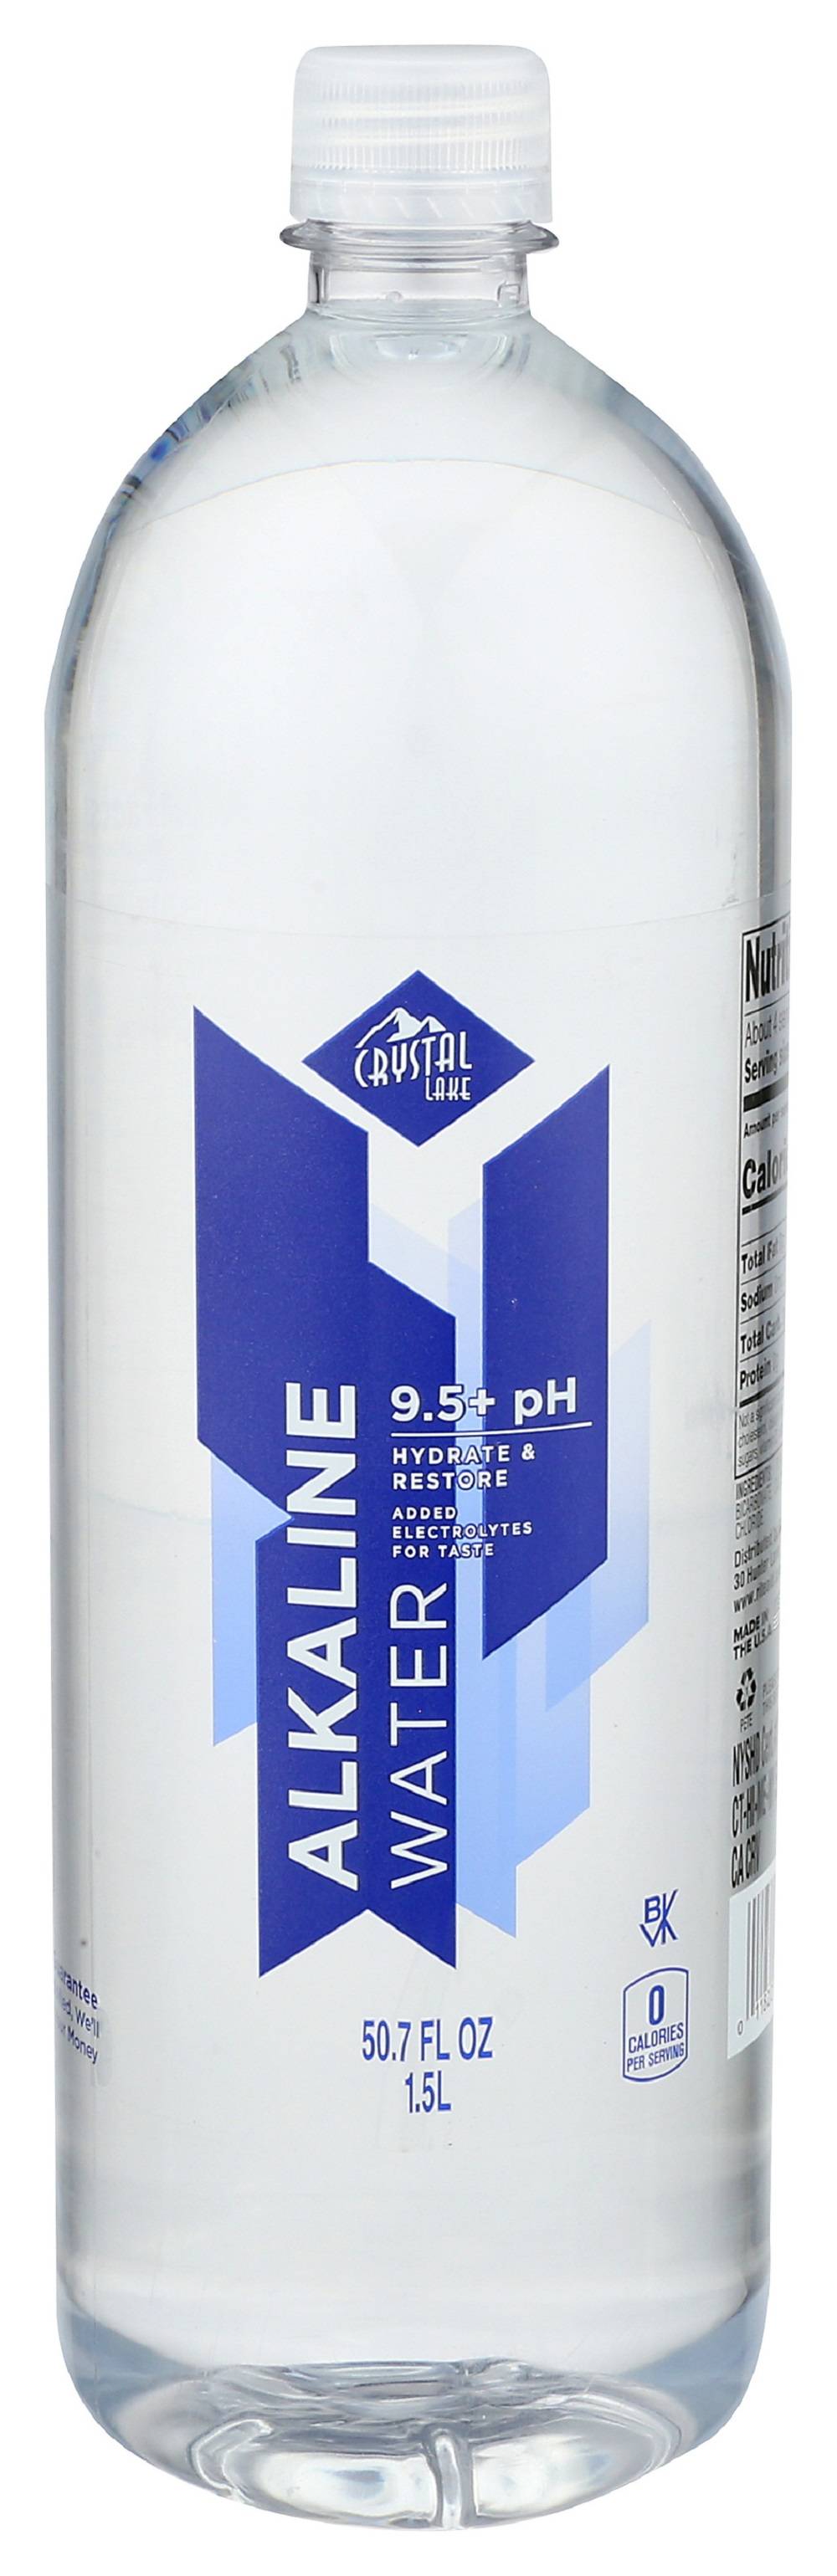 CL Alkaline Water (1.5 L)